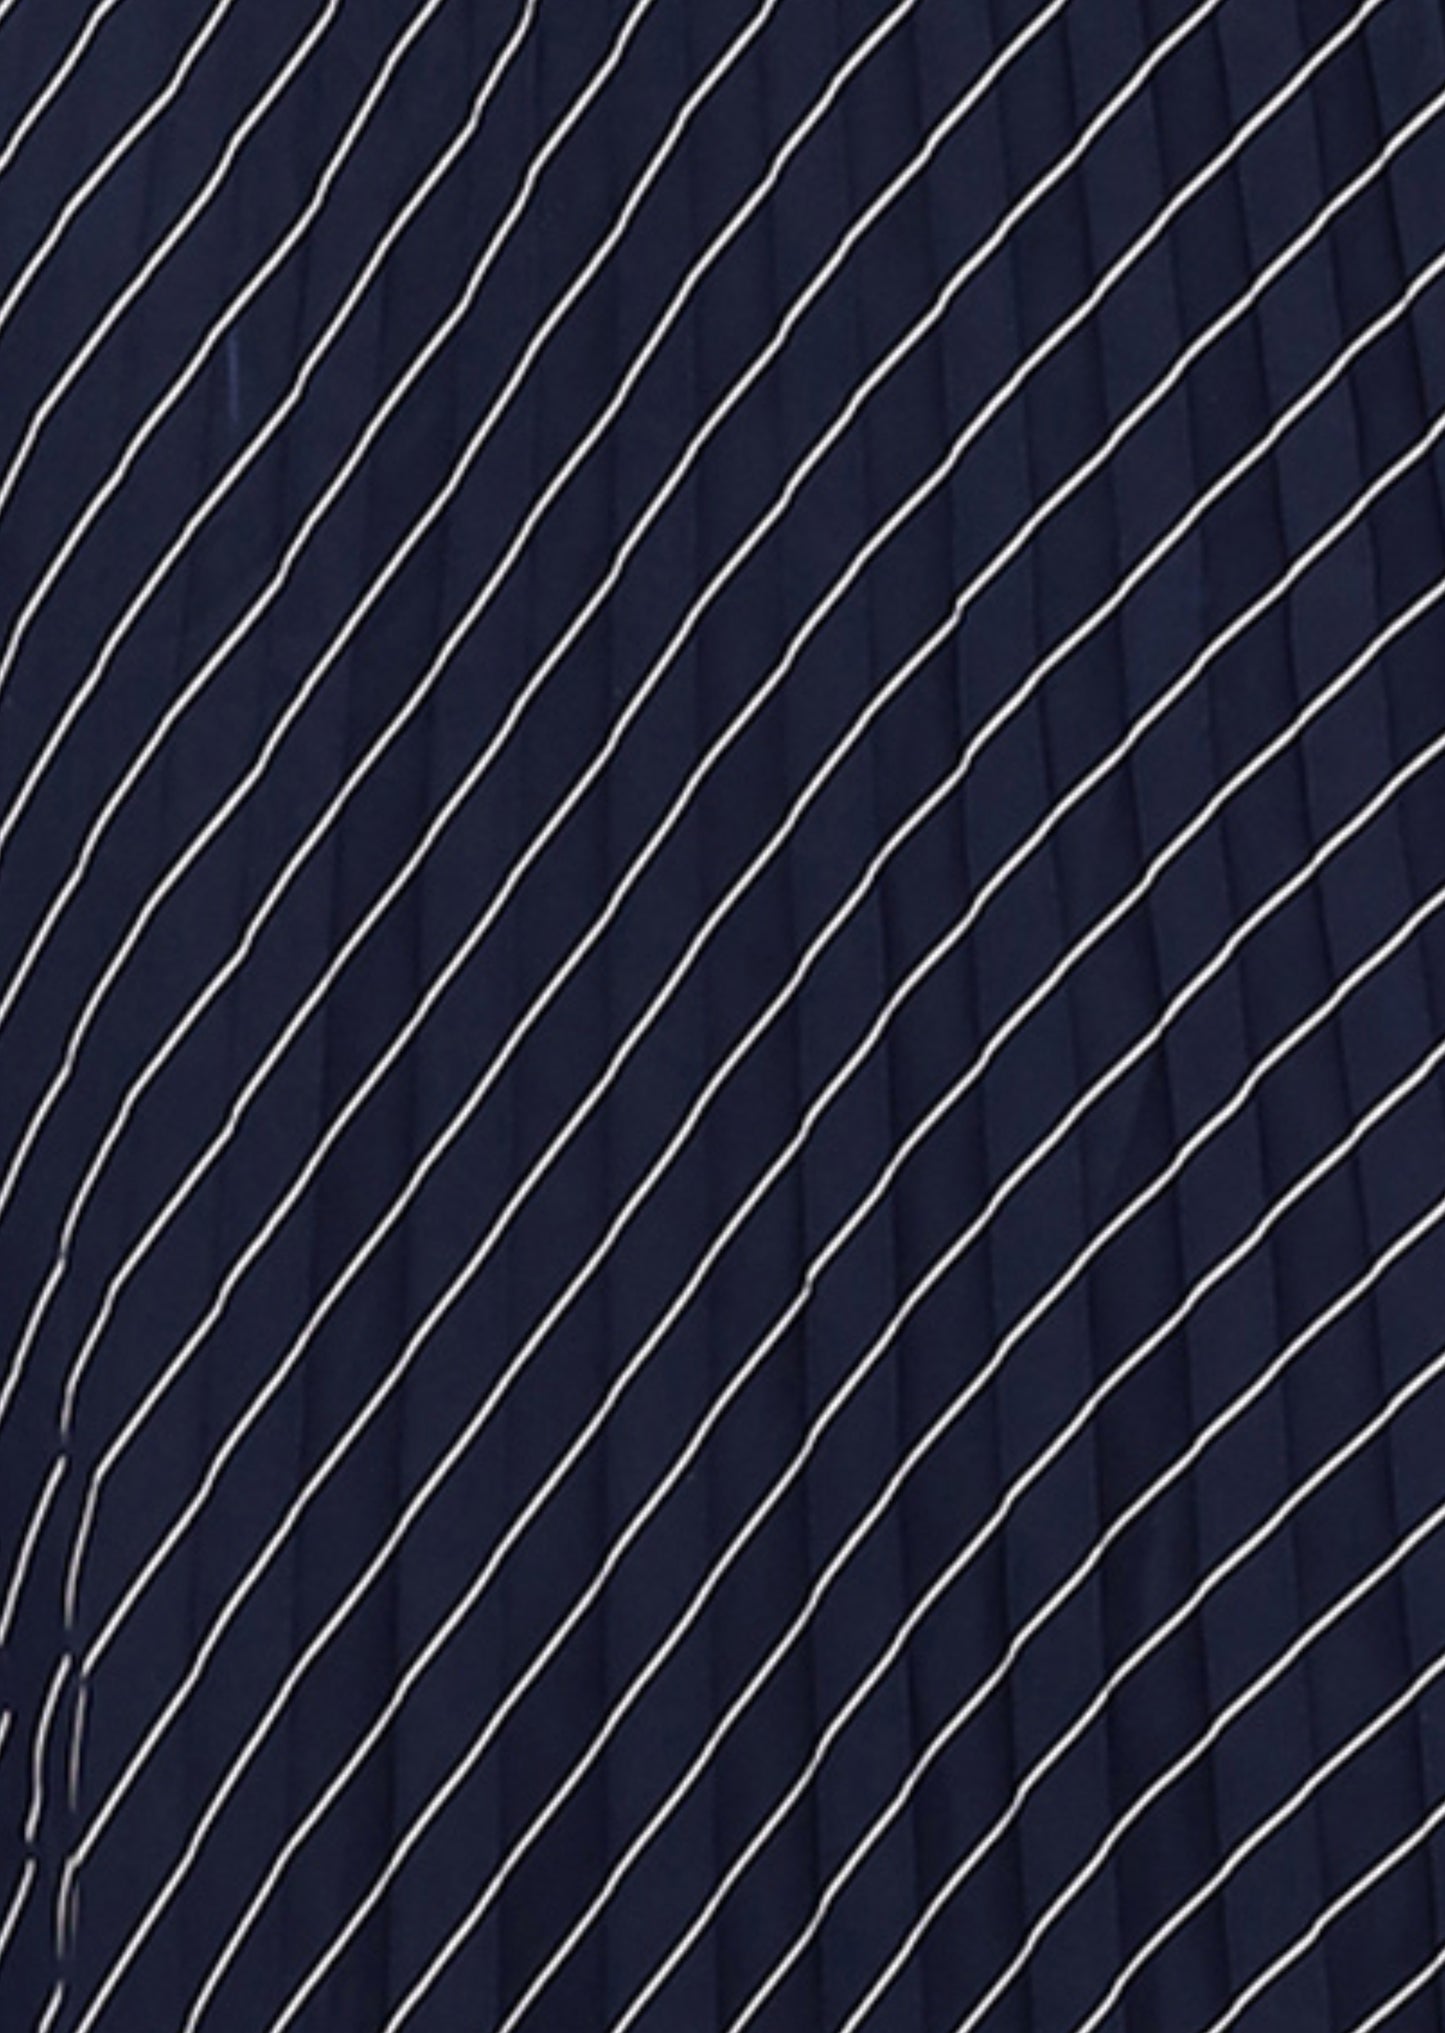 Women's Stripe Print High Waist Skirt Pleated A-line Long Skirt Beach Elasticated Navy Blue Midi Skirt